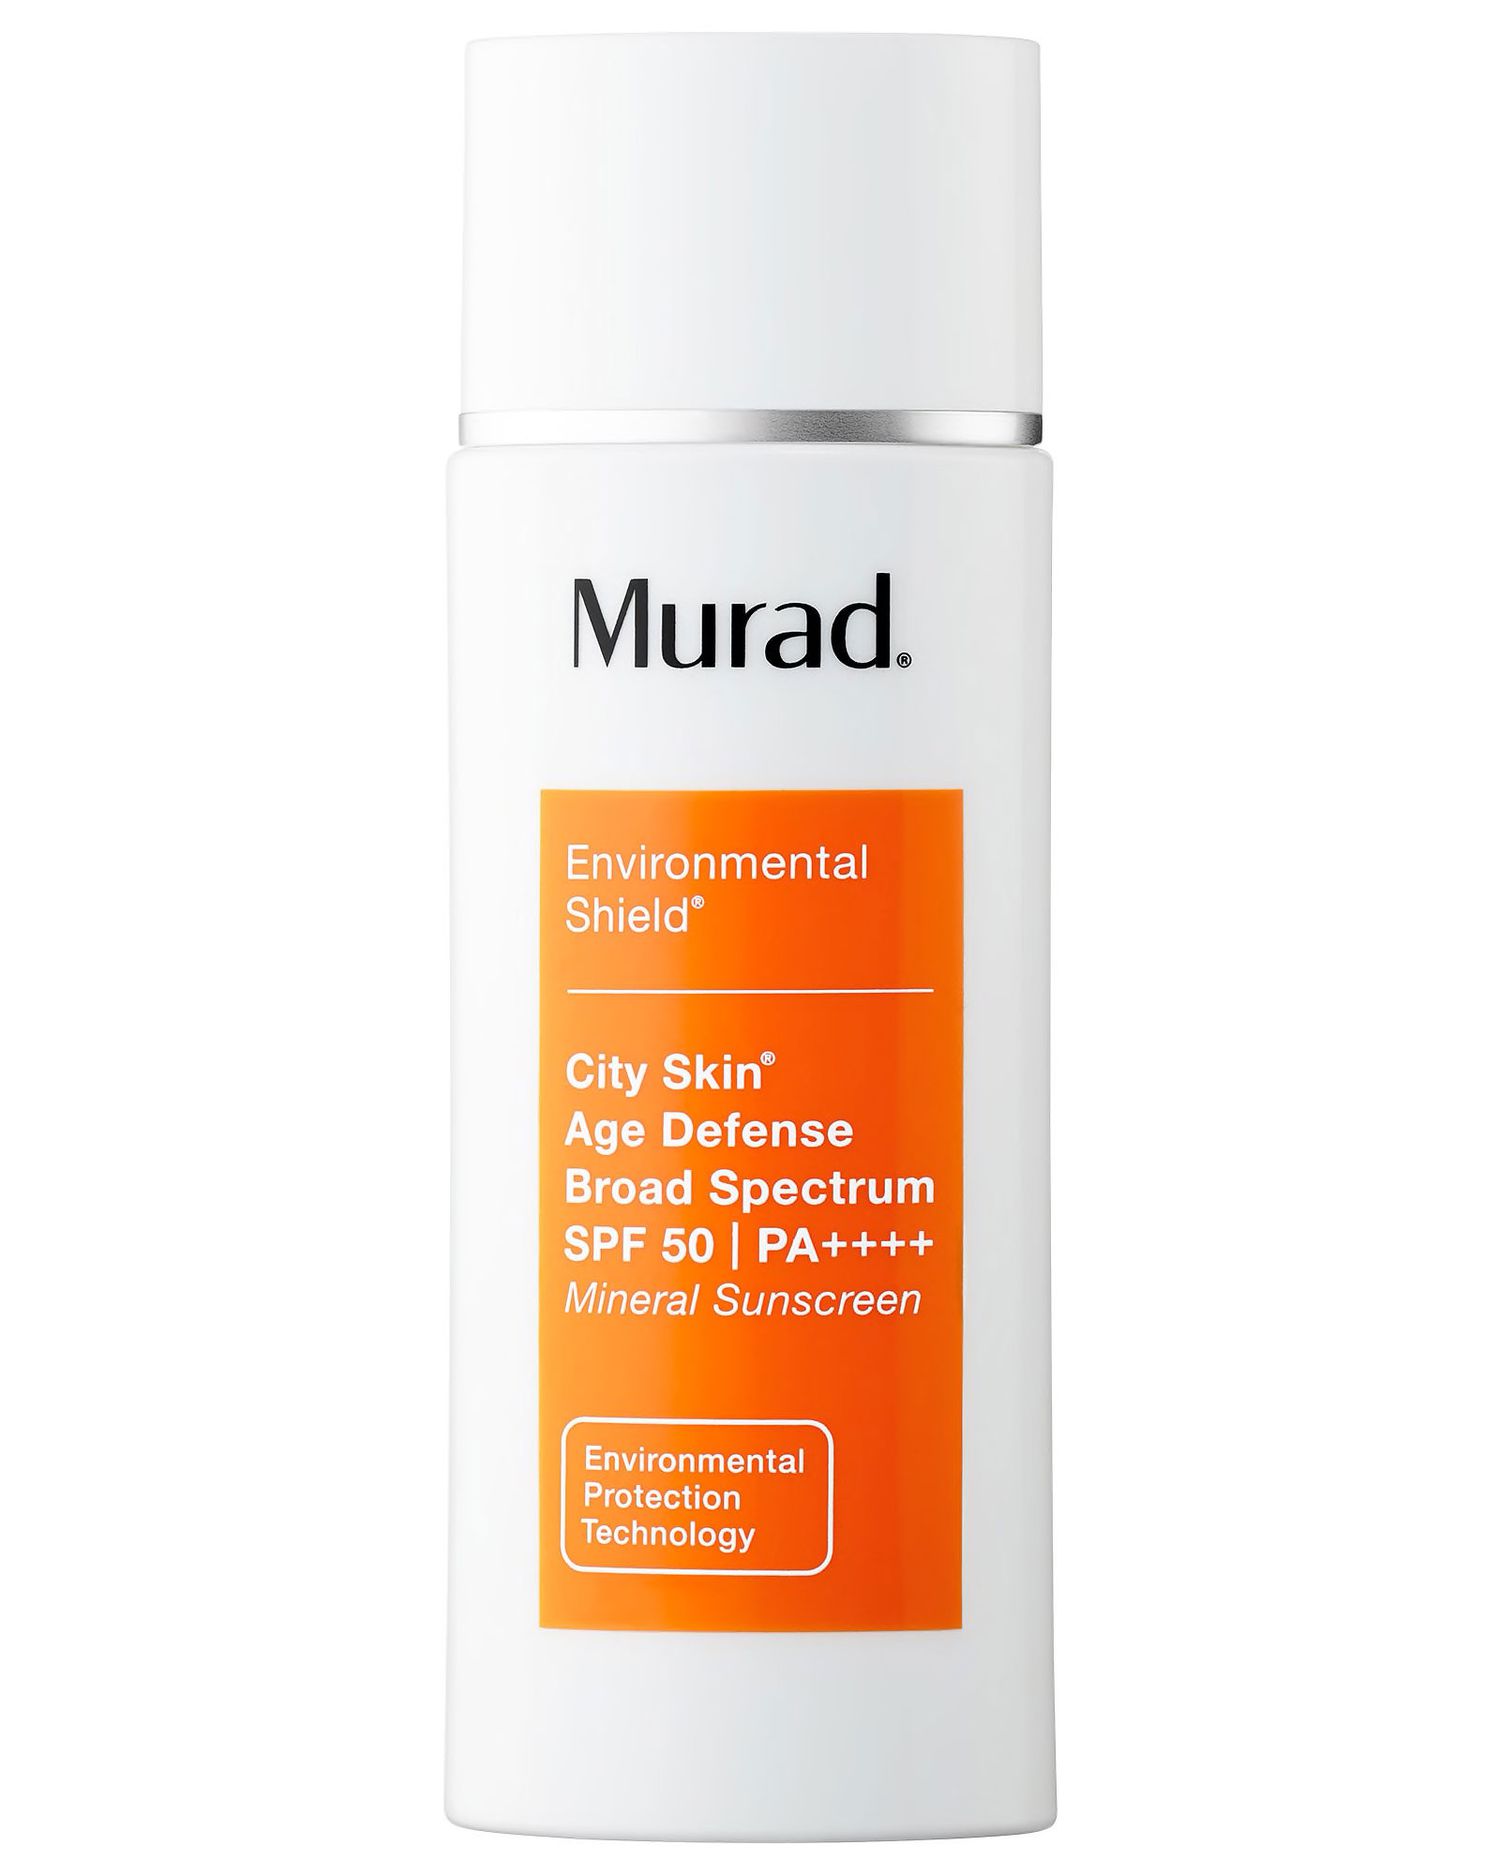 Best Mineral Sunscreen: Murad City Skin Age Defense Broad Spectrum SPF 50 PA++++